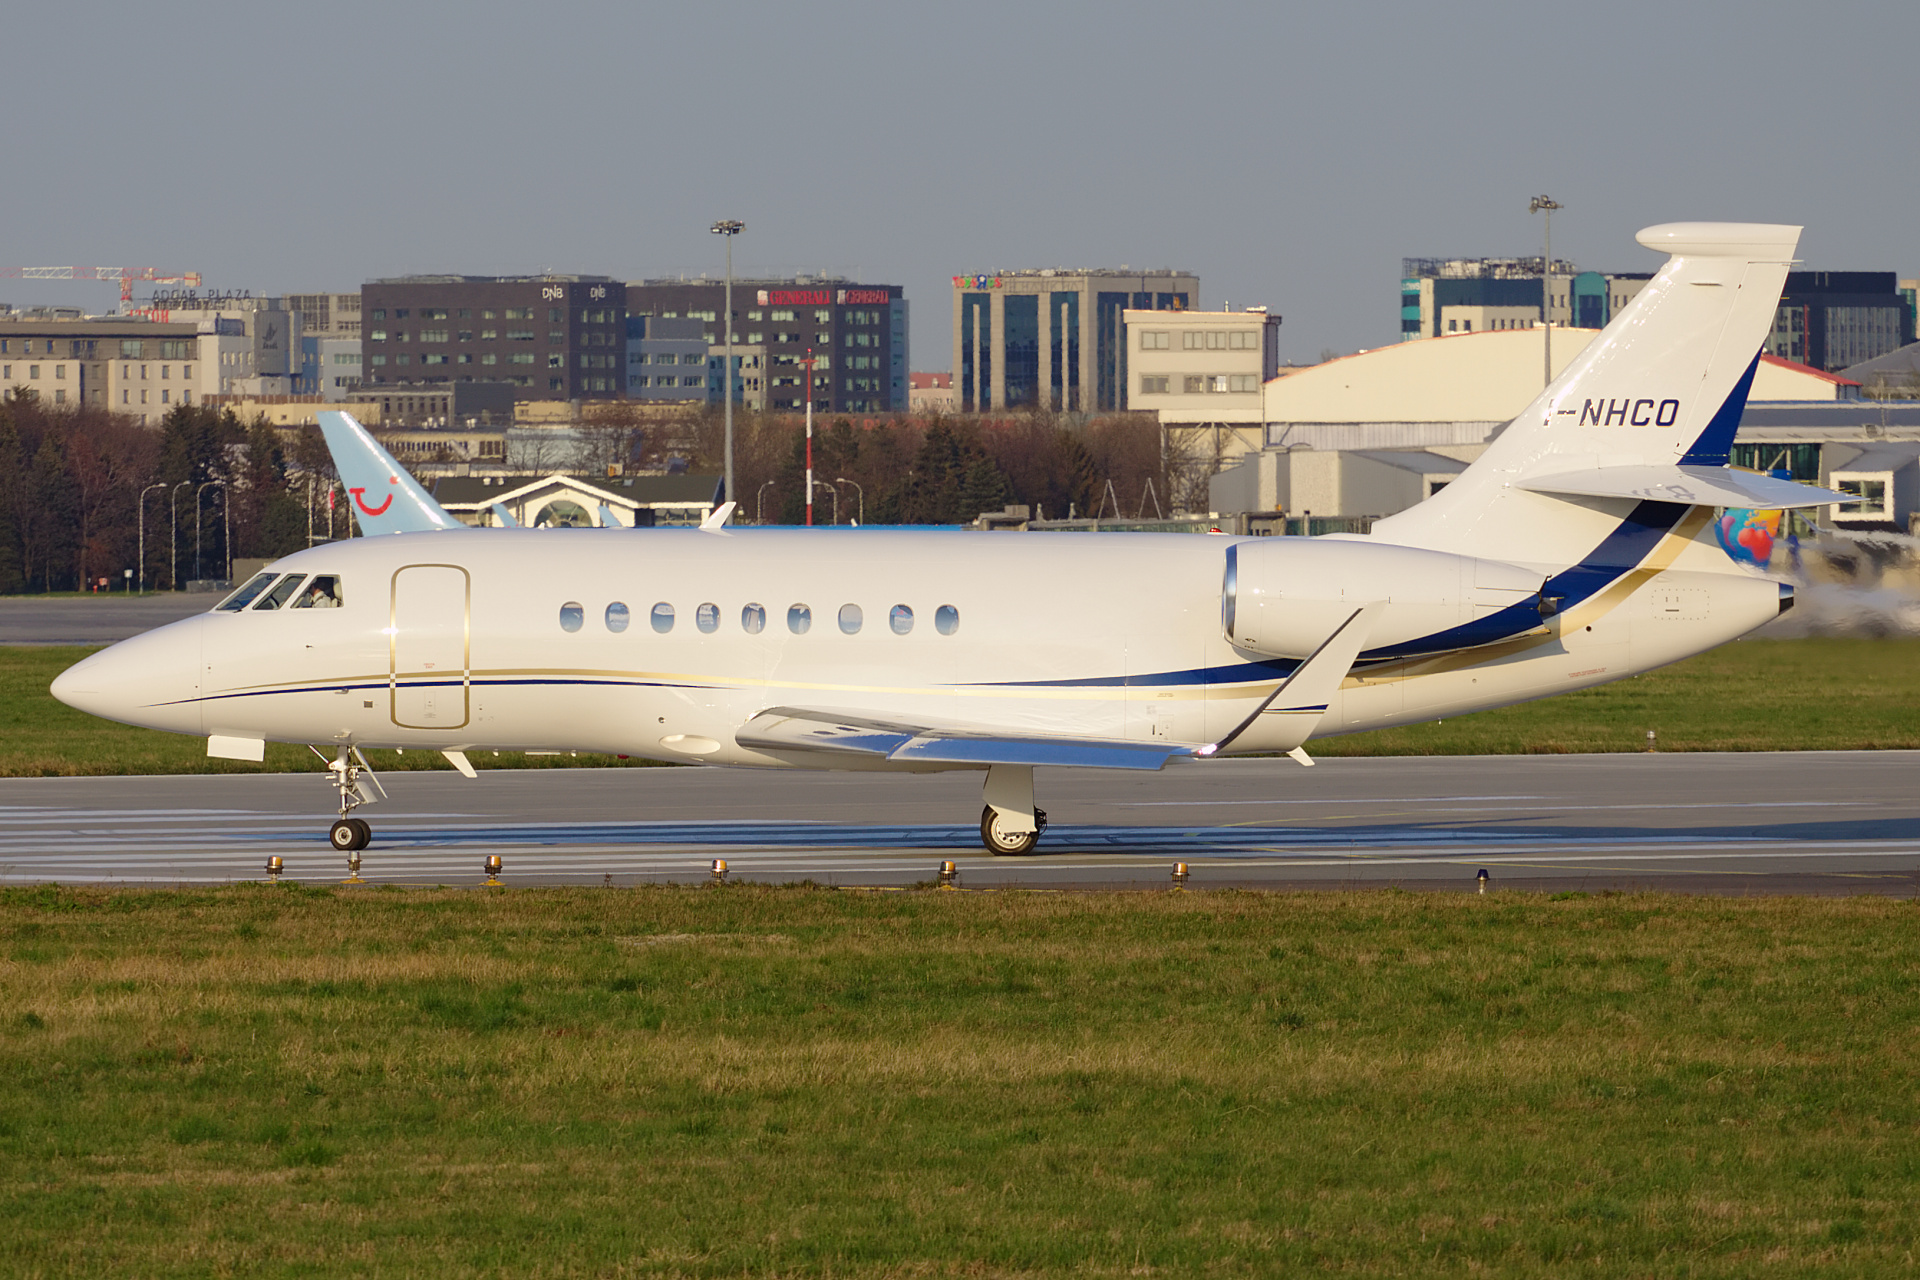 2000LX, I-NHCO, Eurofly Service (Aircraft » EPWA Spotting » Dassault Falcon 2000)